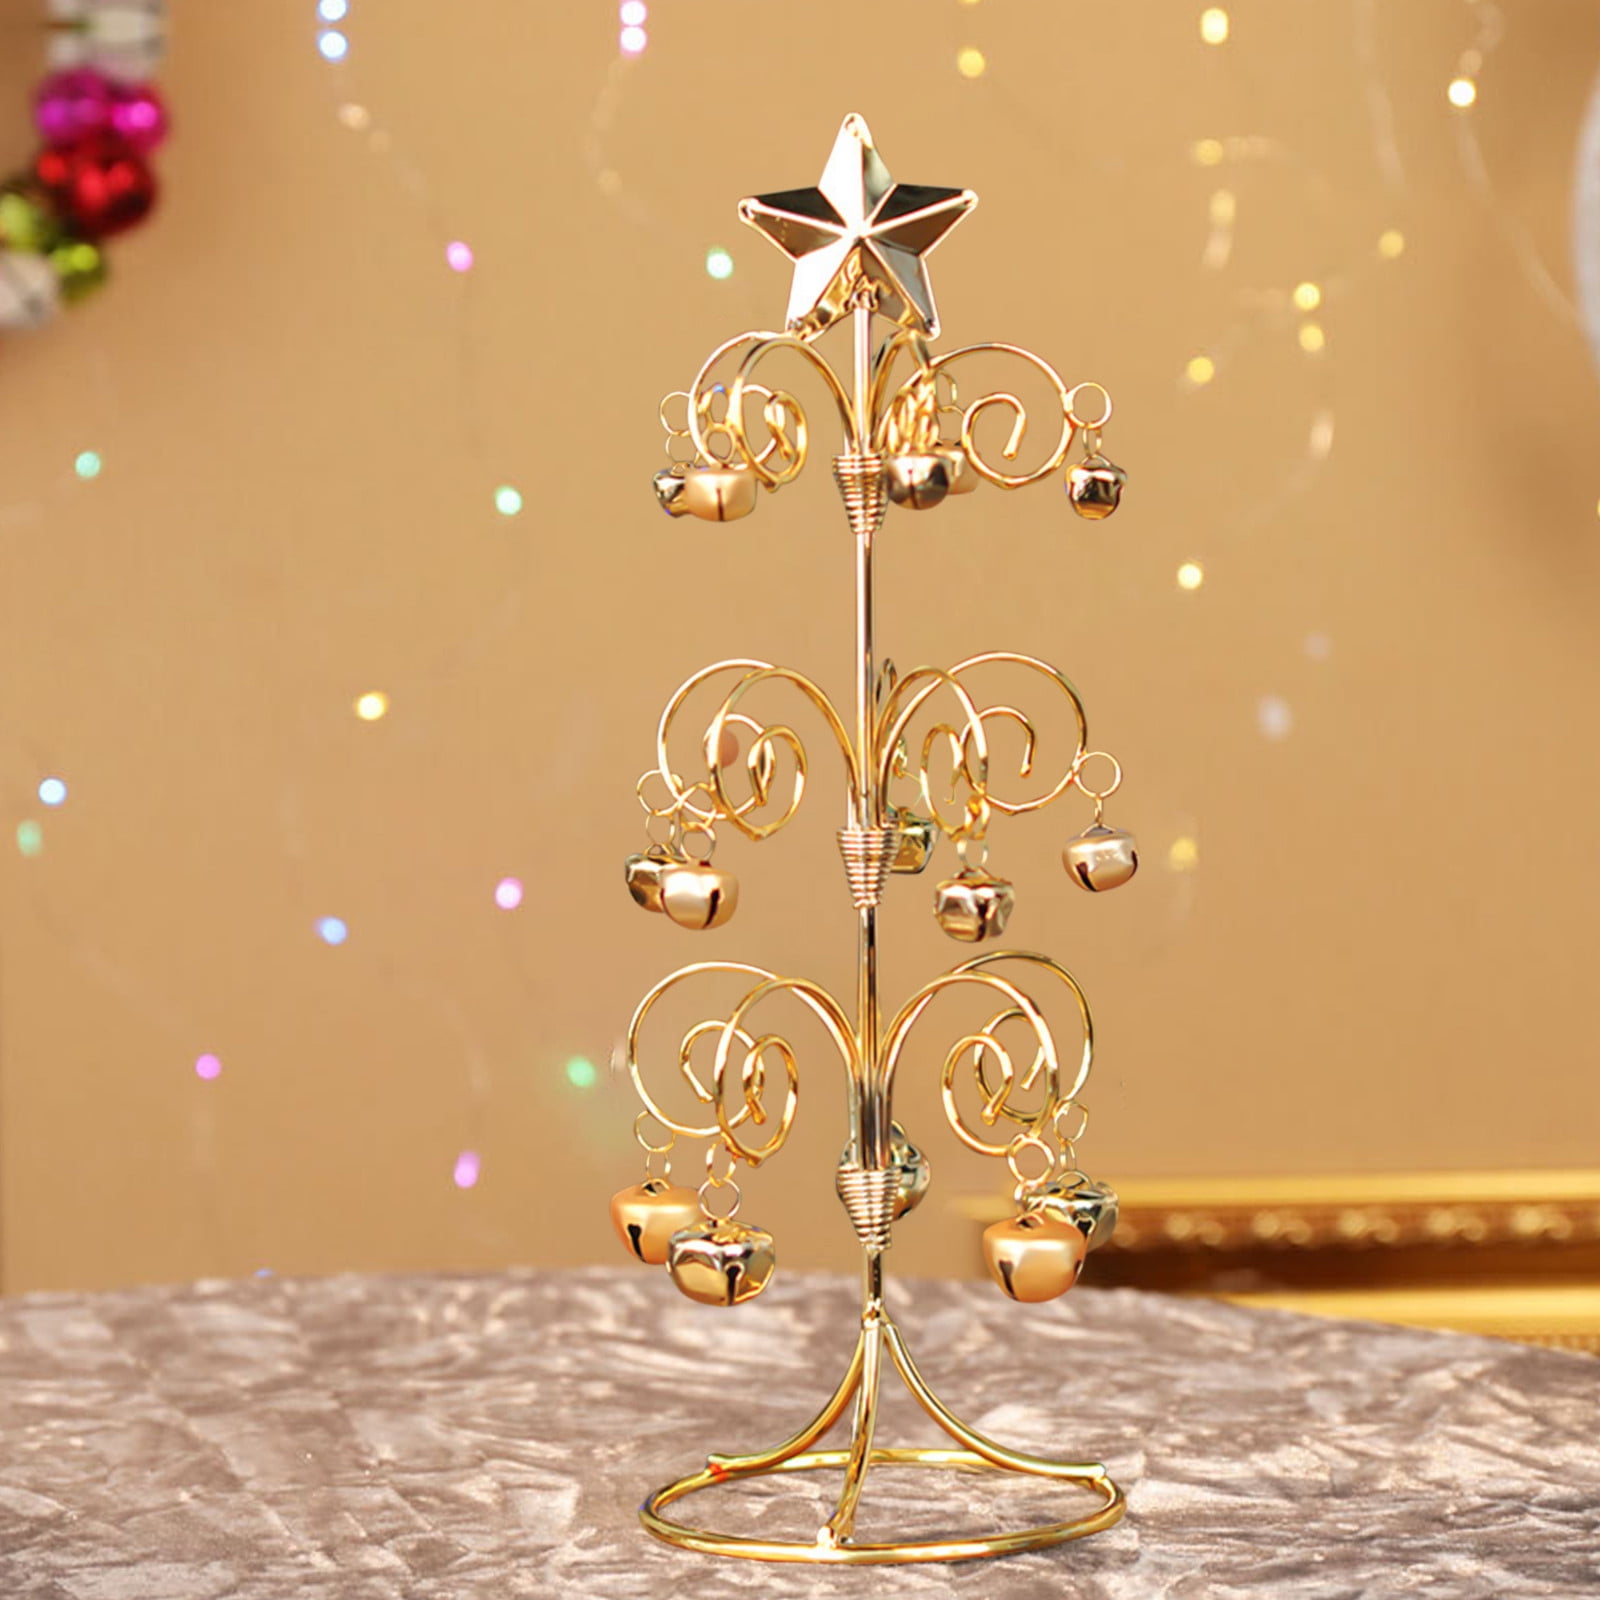 Old World Christmas S-Hooks Ornament Hanger - 24 Ornament Hooks 1.75 Inches  - Gold Tree Swirl - 14100 - Metal - Gold